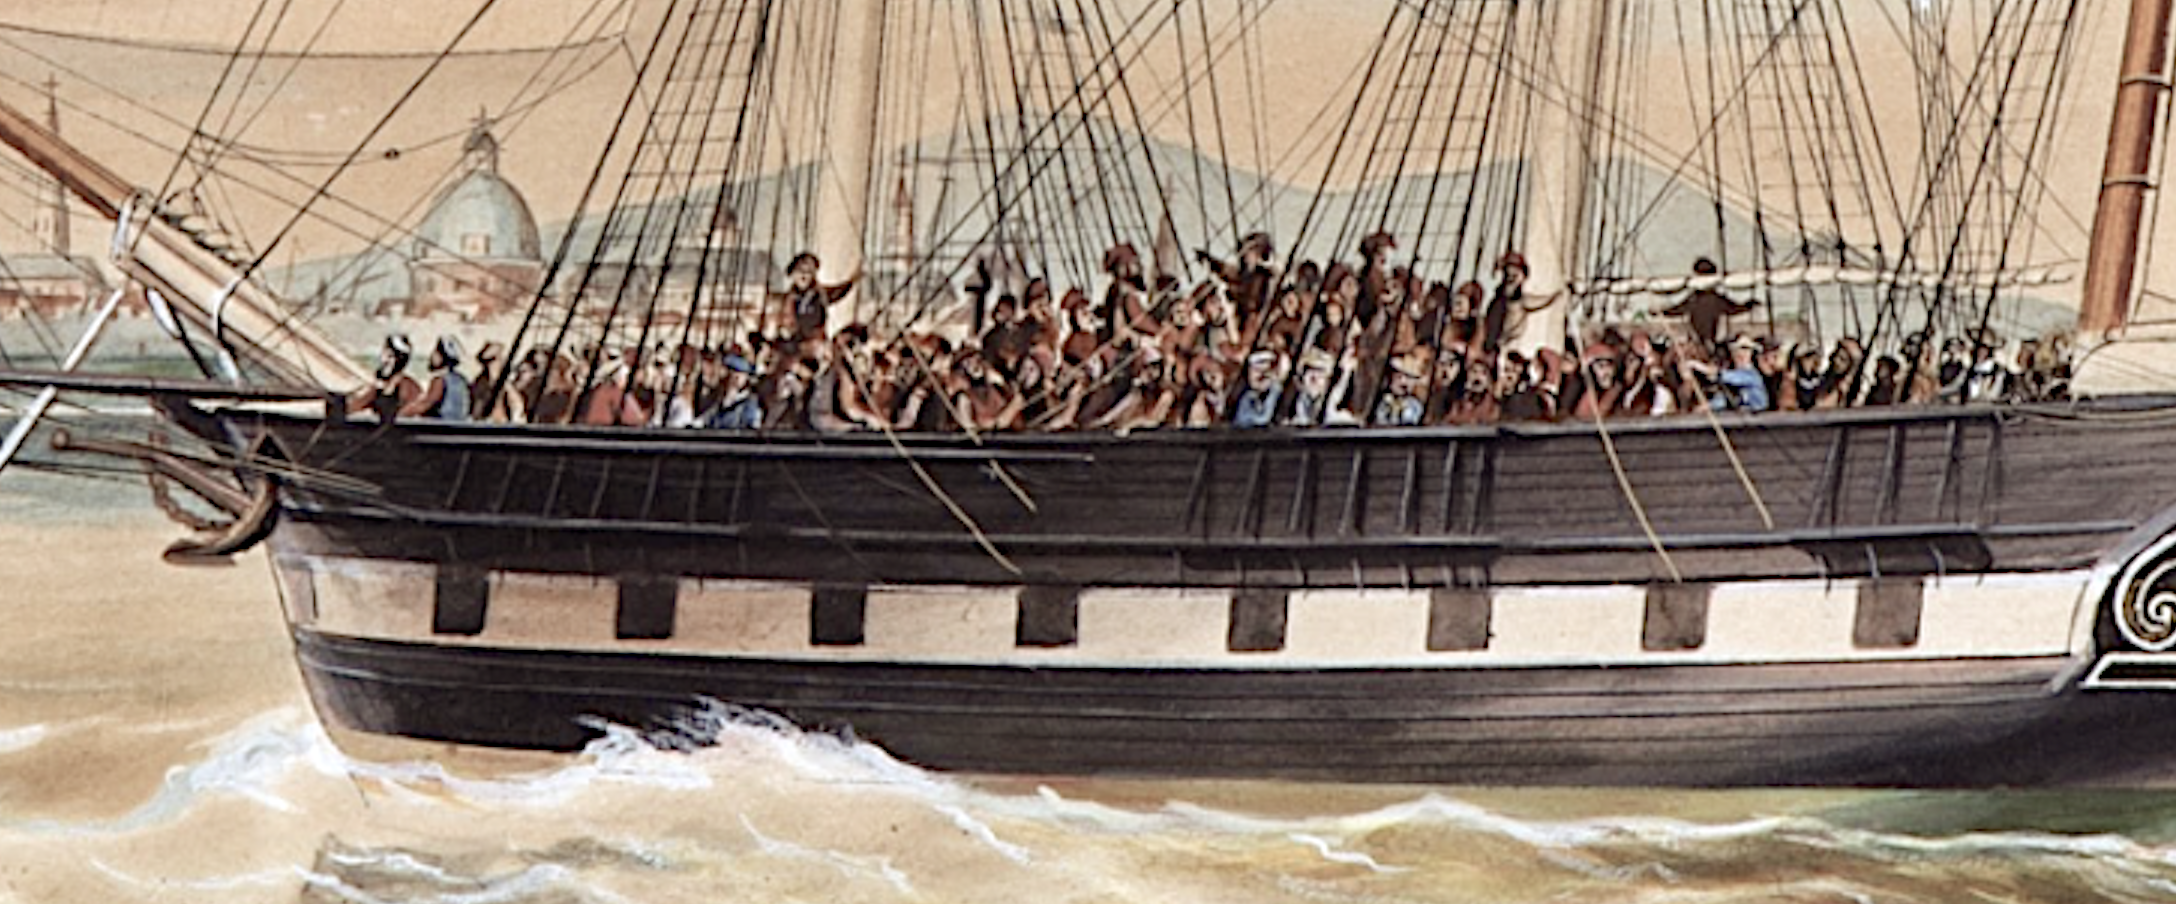 Detail of deported Spanish revolutionaries of 1848 onboard the Dutch barque Reijerwaard arriving in the Philippines.